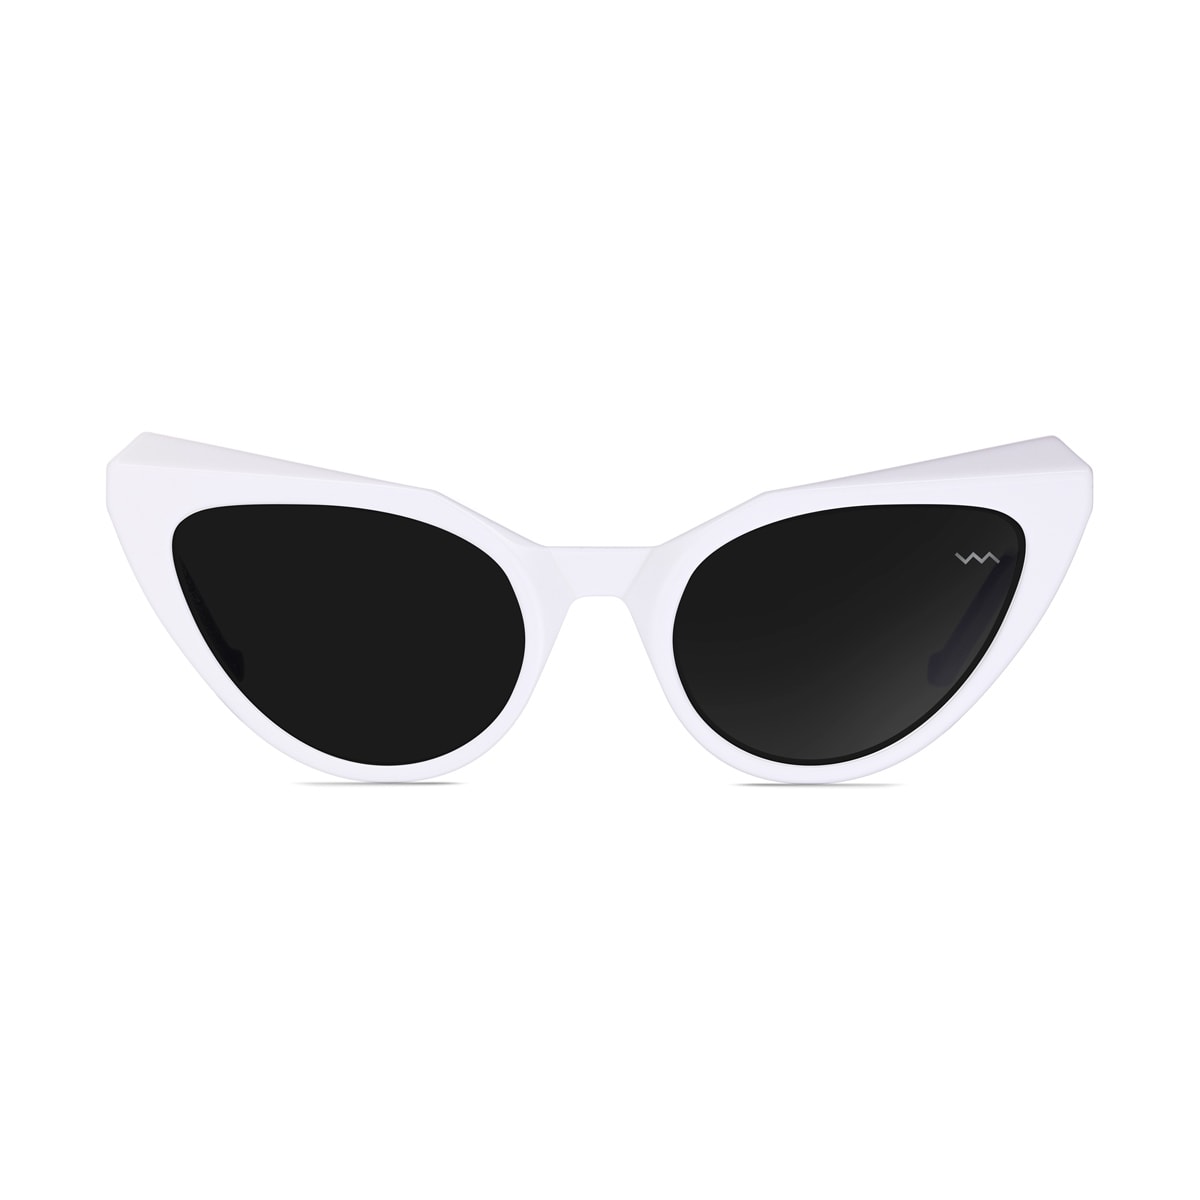 Bl0028 Black Label White Sunglasses